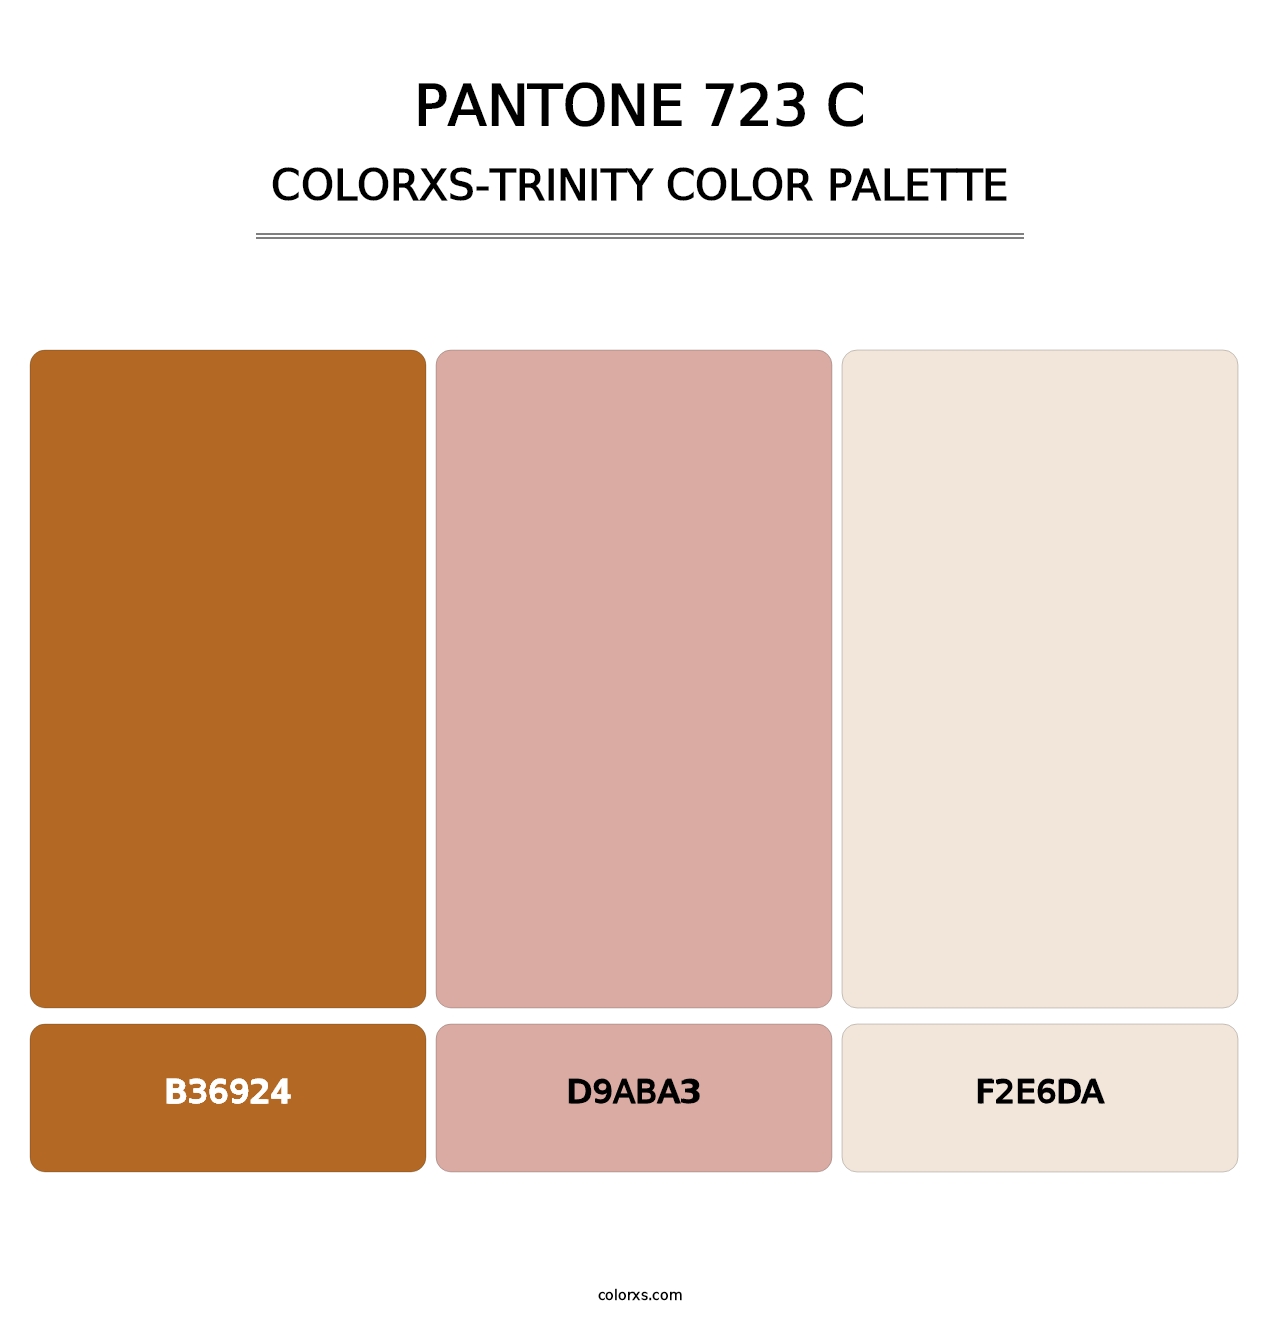 PANTONE 723 C - Colorxs Trinity Palette